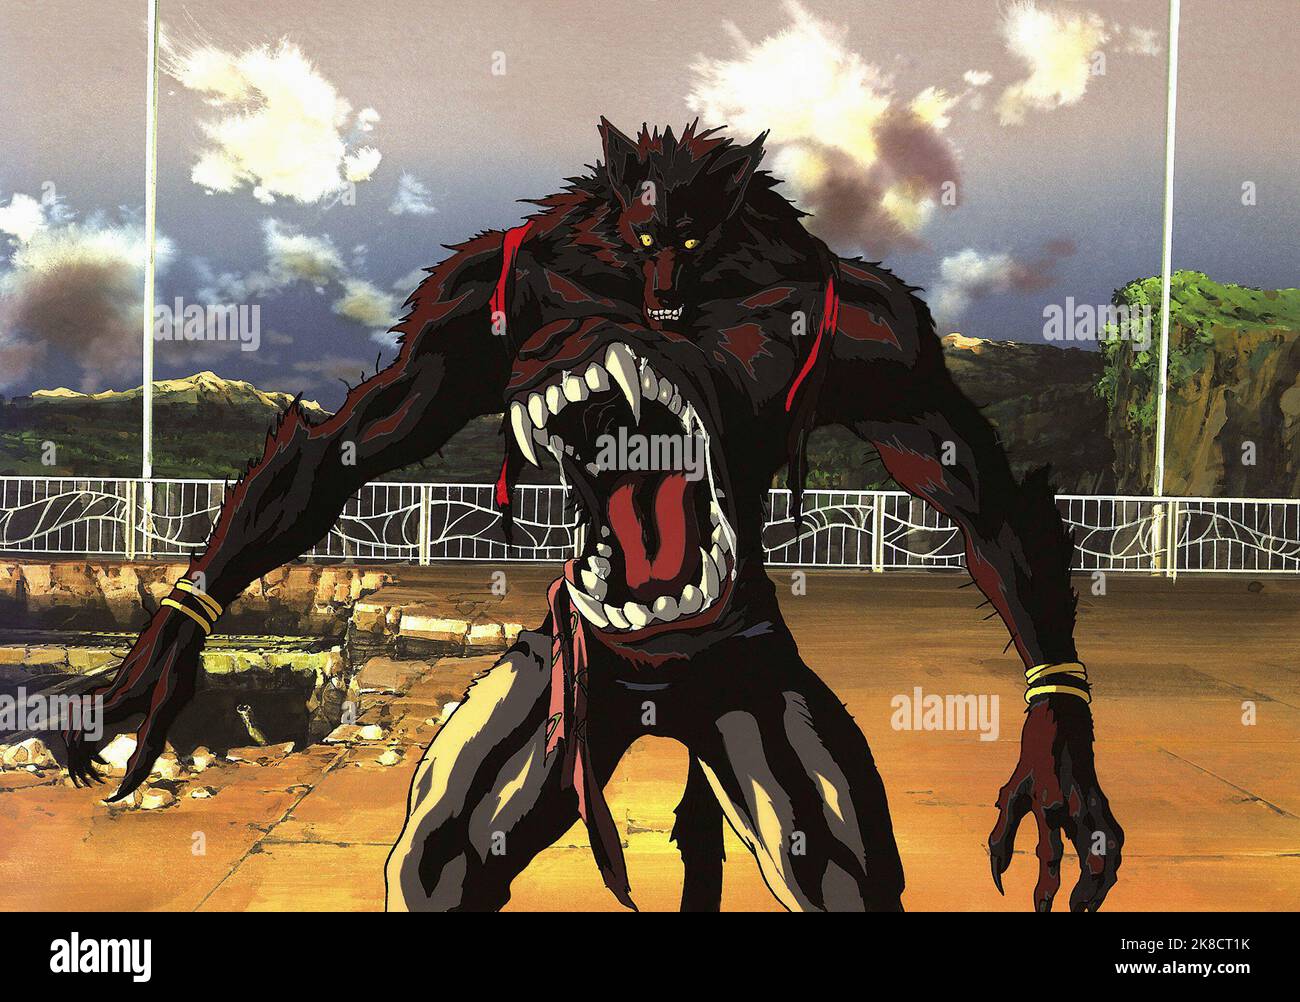 Vampire Hunter D: Bloodlust coming to Blu HD wallpaper